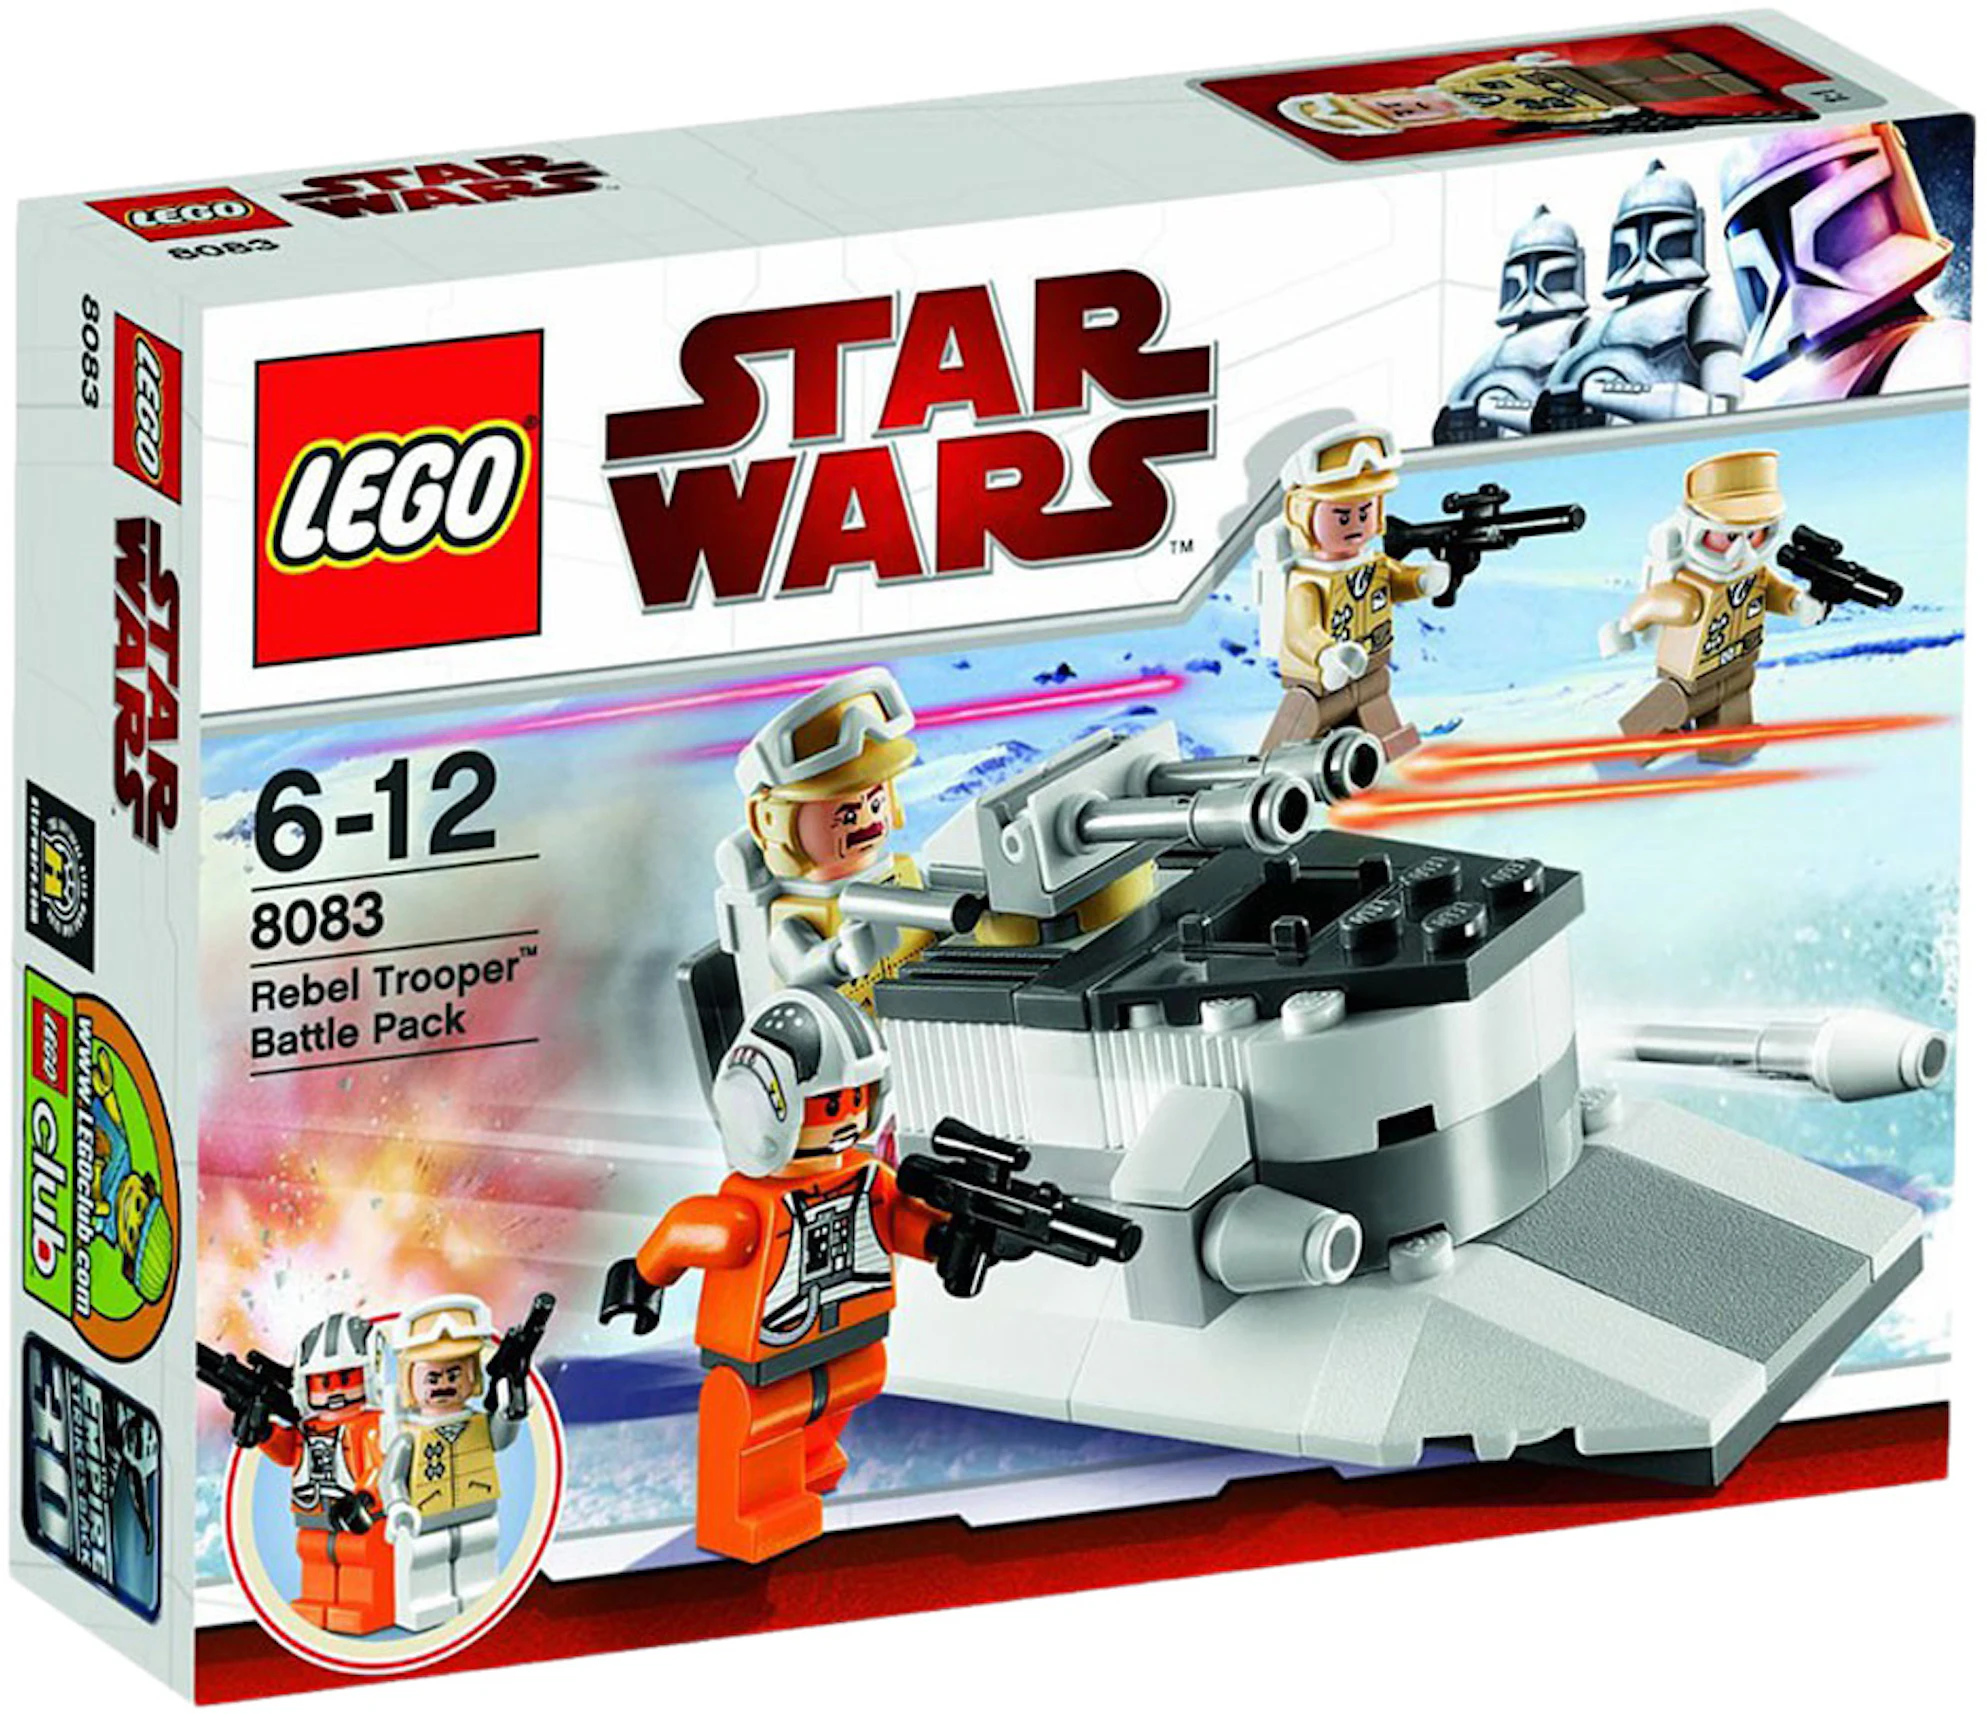 Dor alias Alvast LEGO Star Wars The Empire Strikes Back Rebel Trooper Army Pack Set 8083 - US